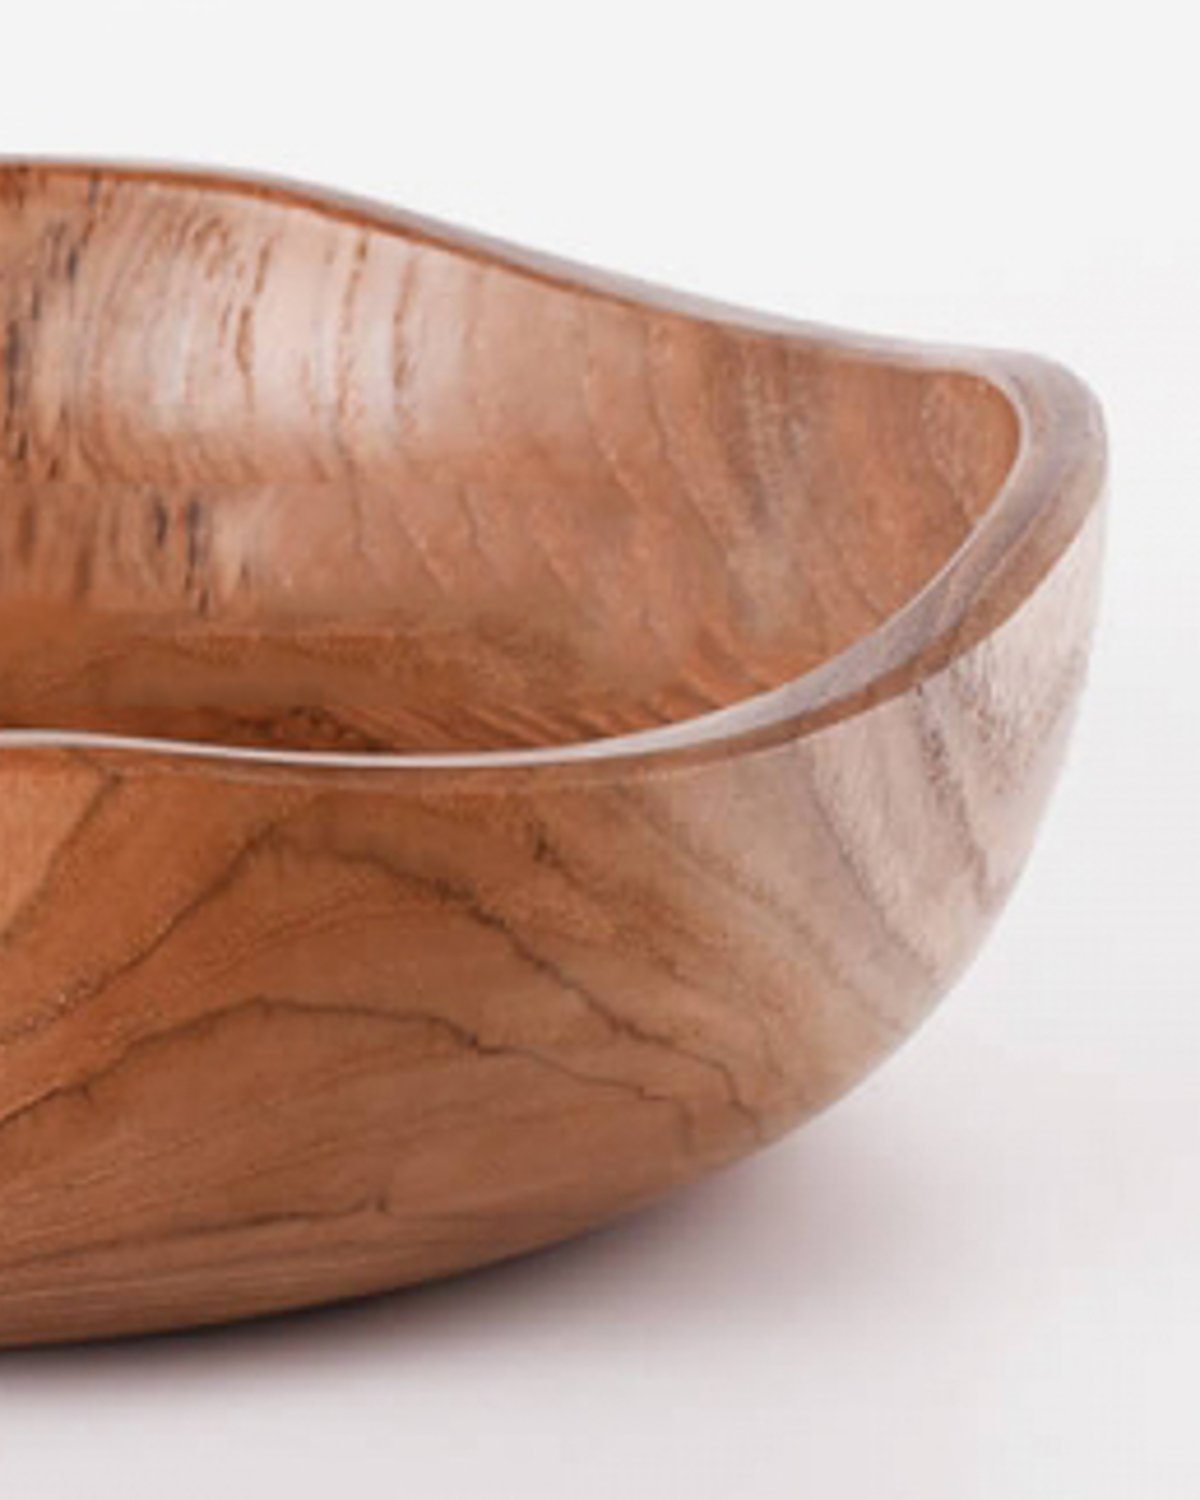 Timber Bowl - Willow Rayell 